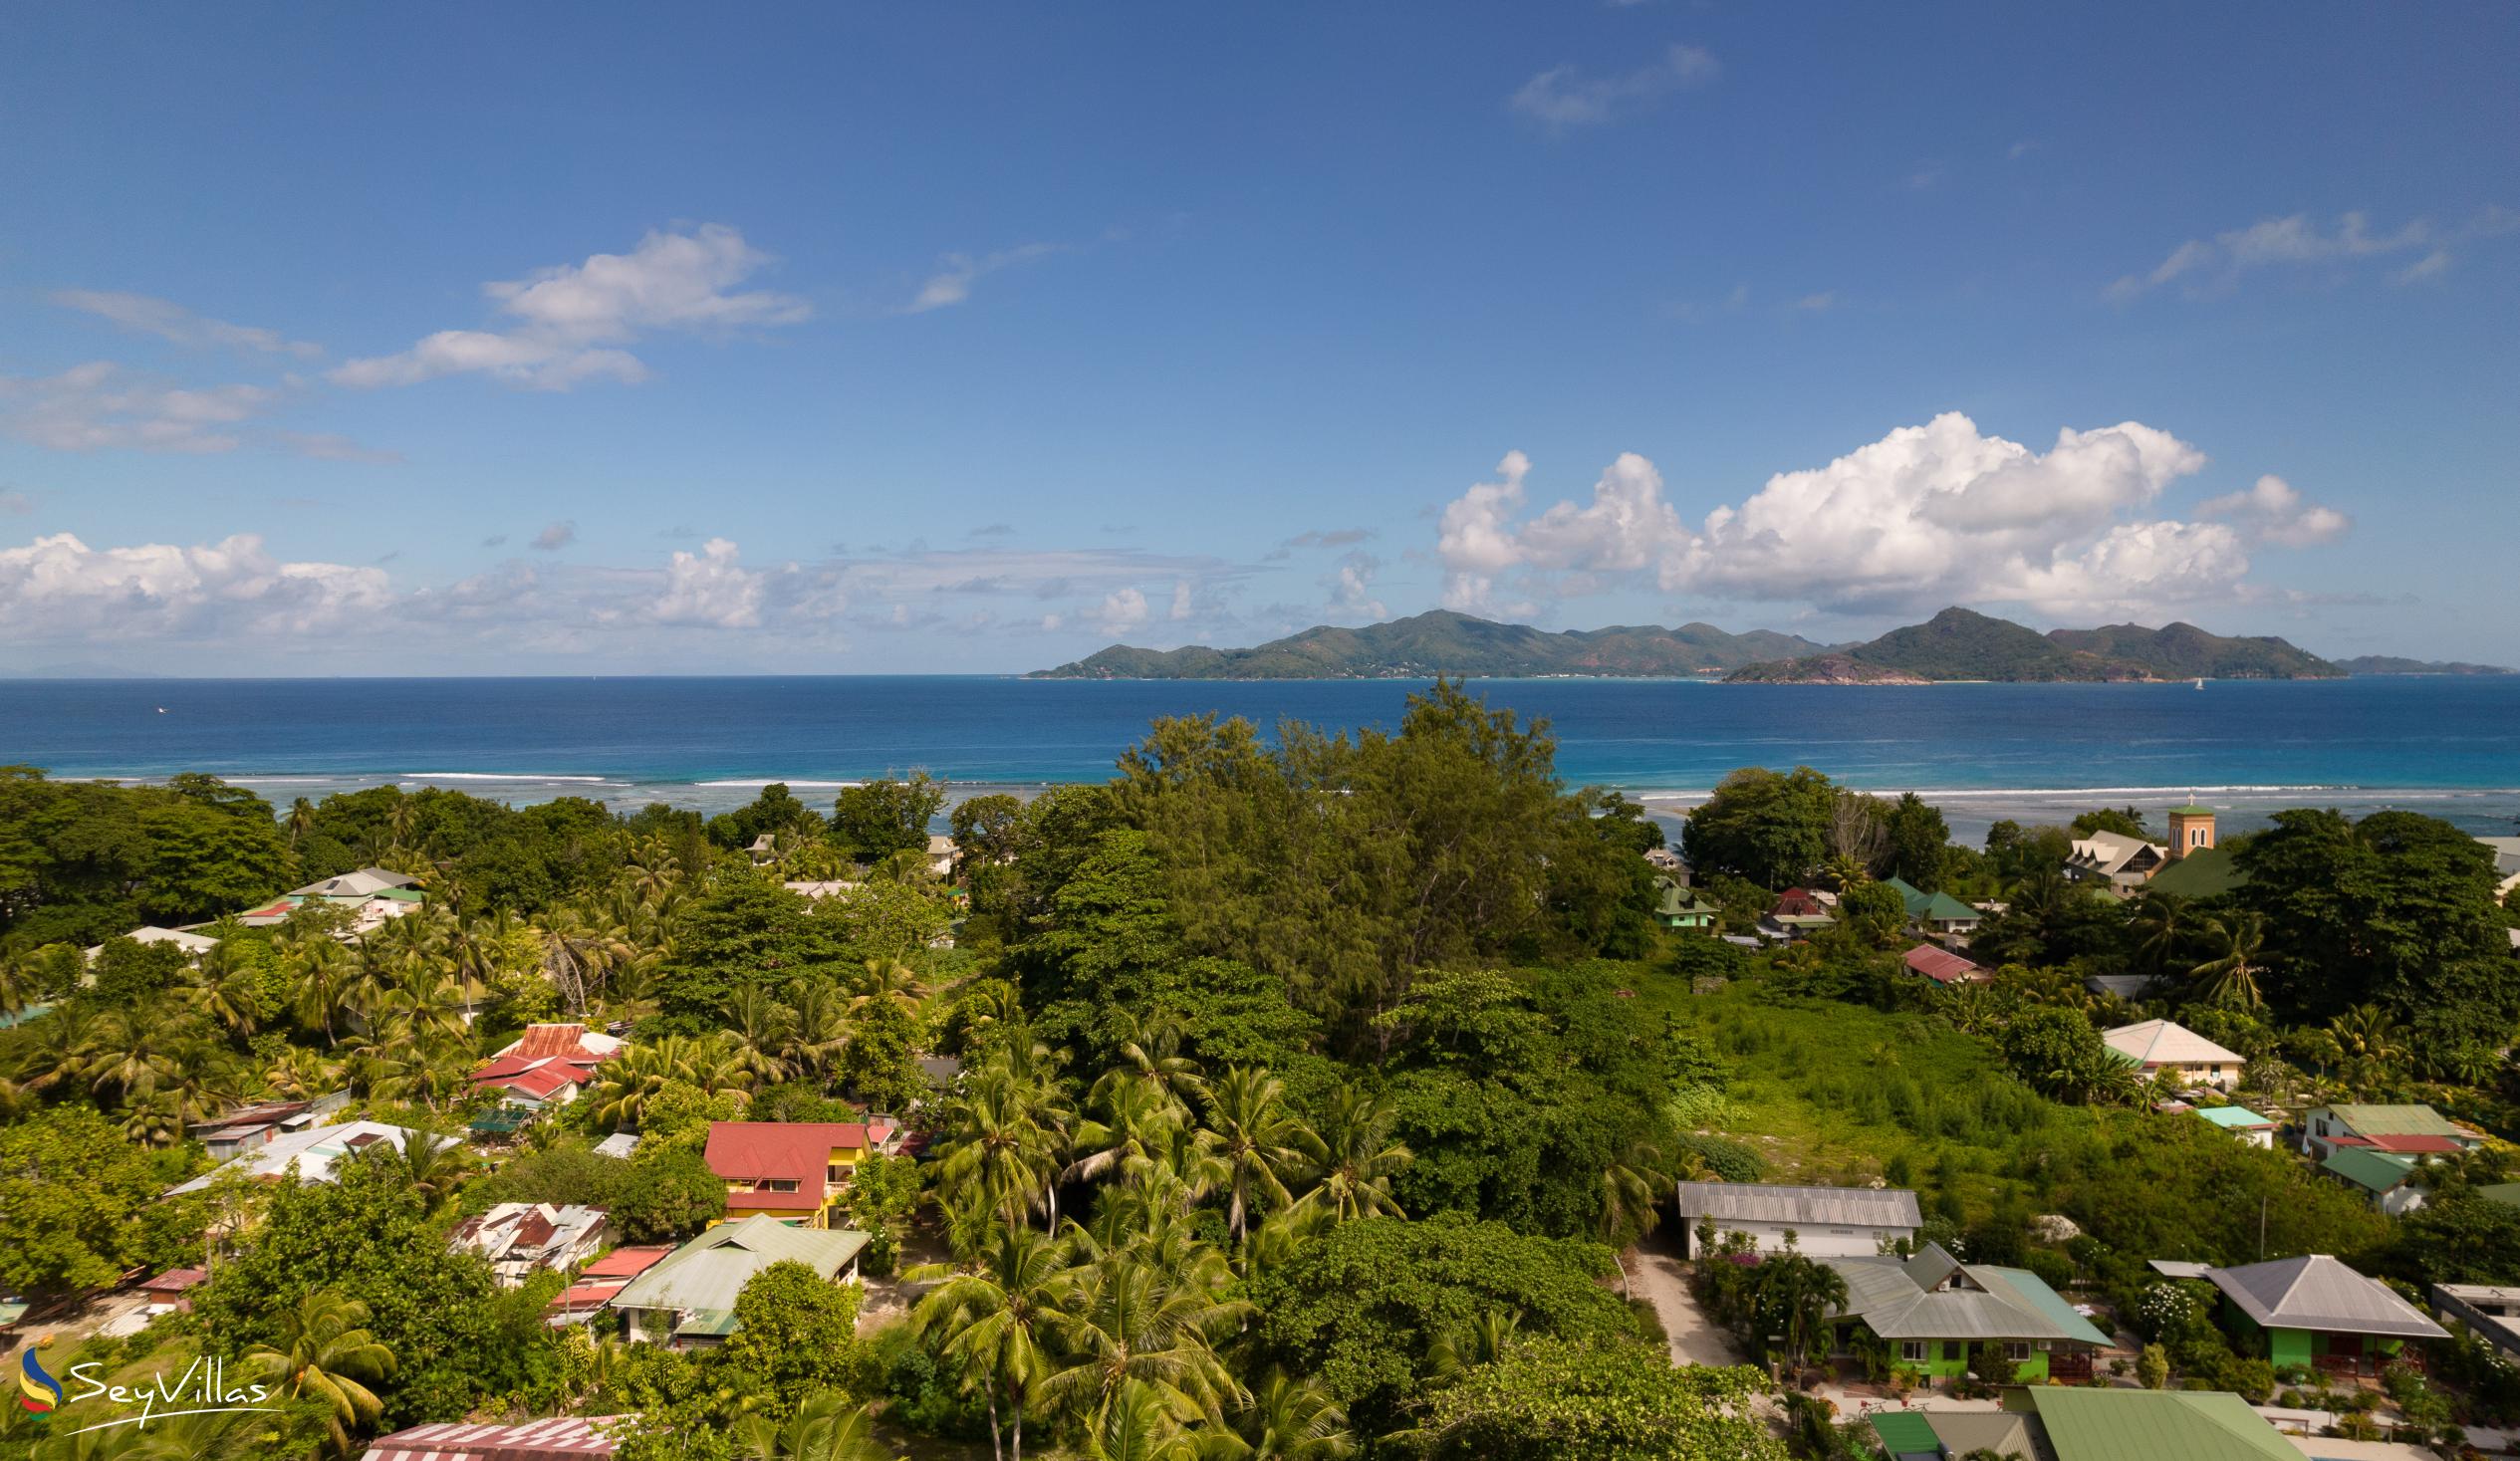 Photo 29: Coco de Mahi - Location - La Digue (Seychelles)